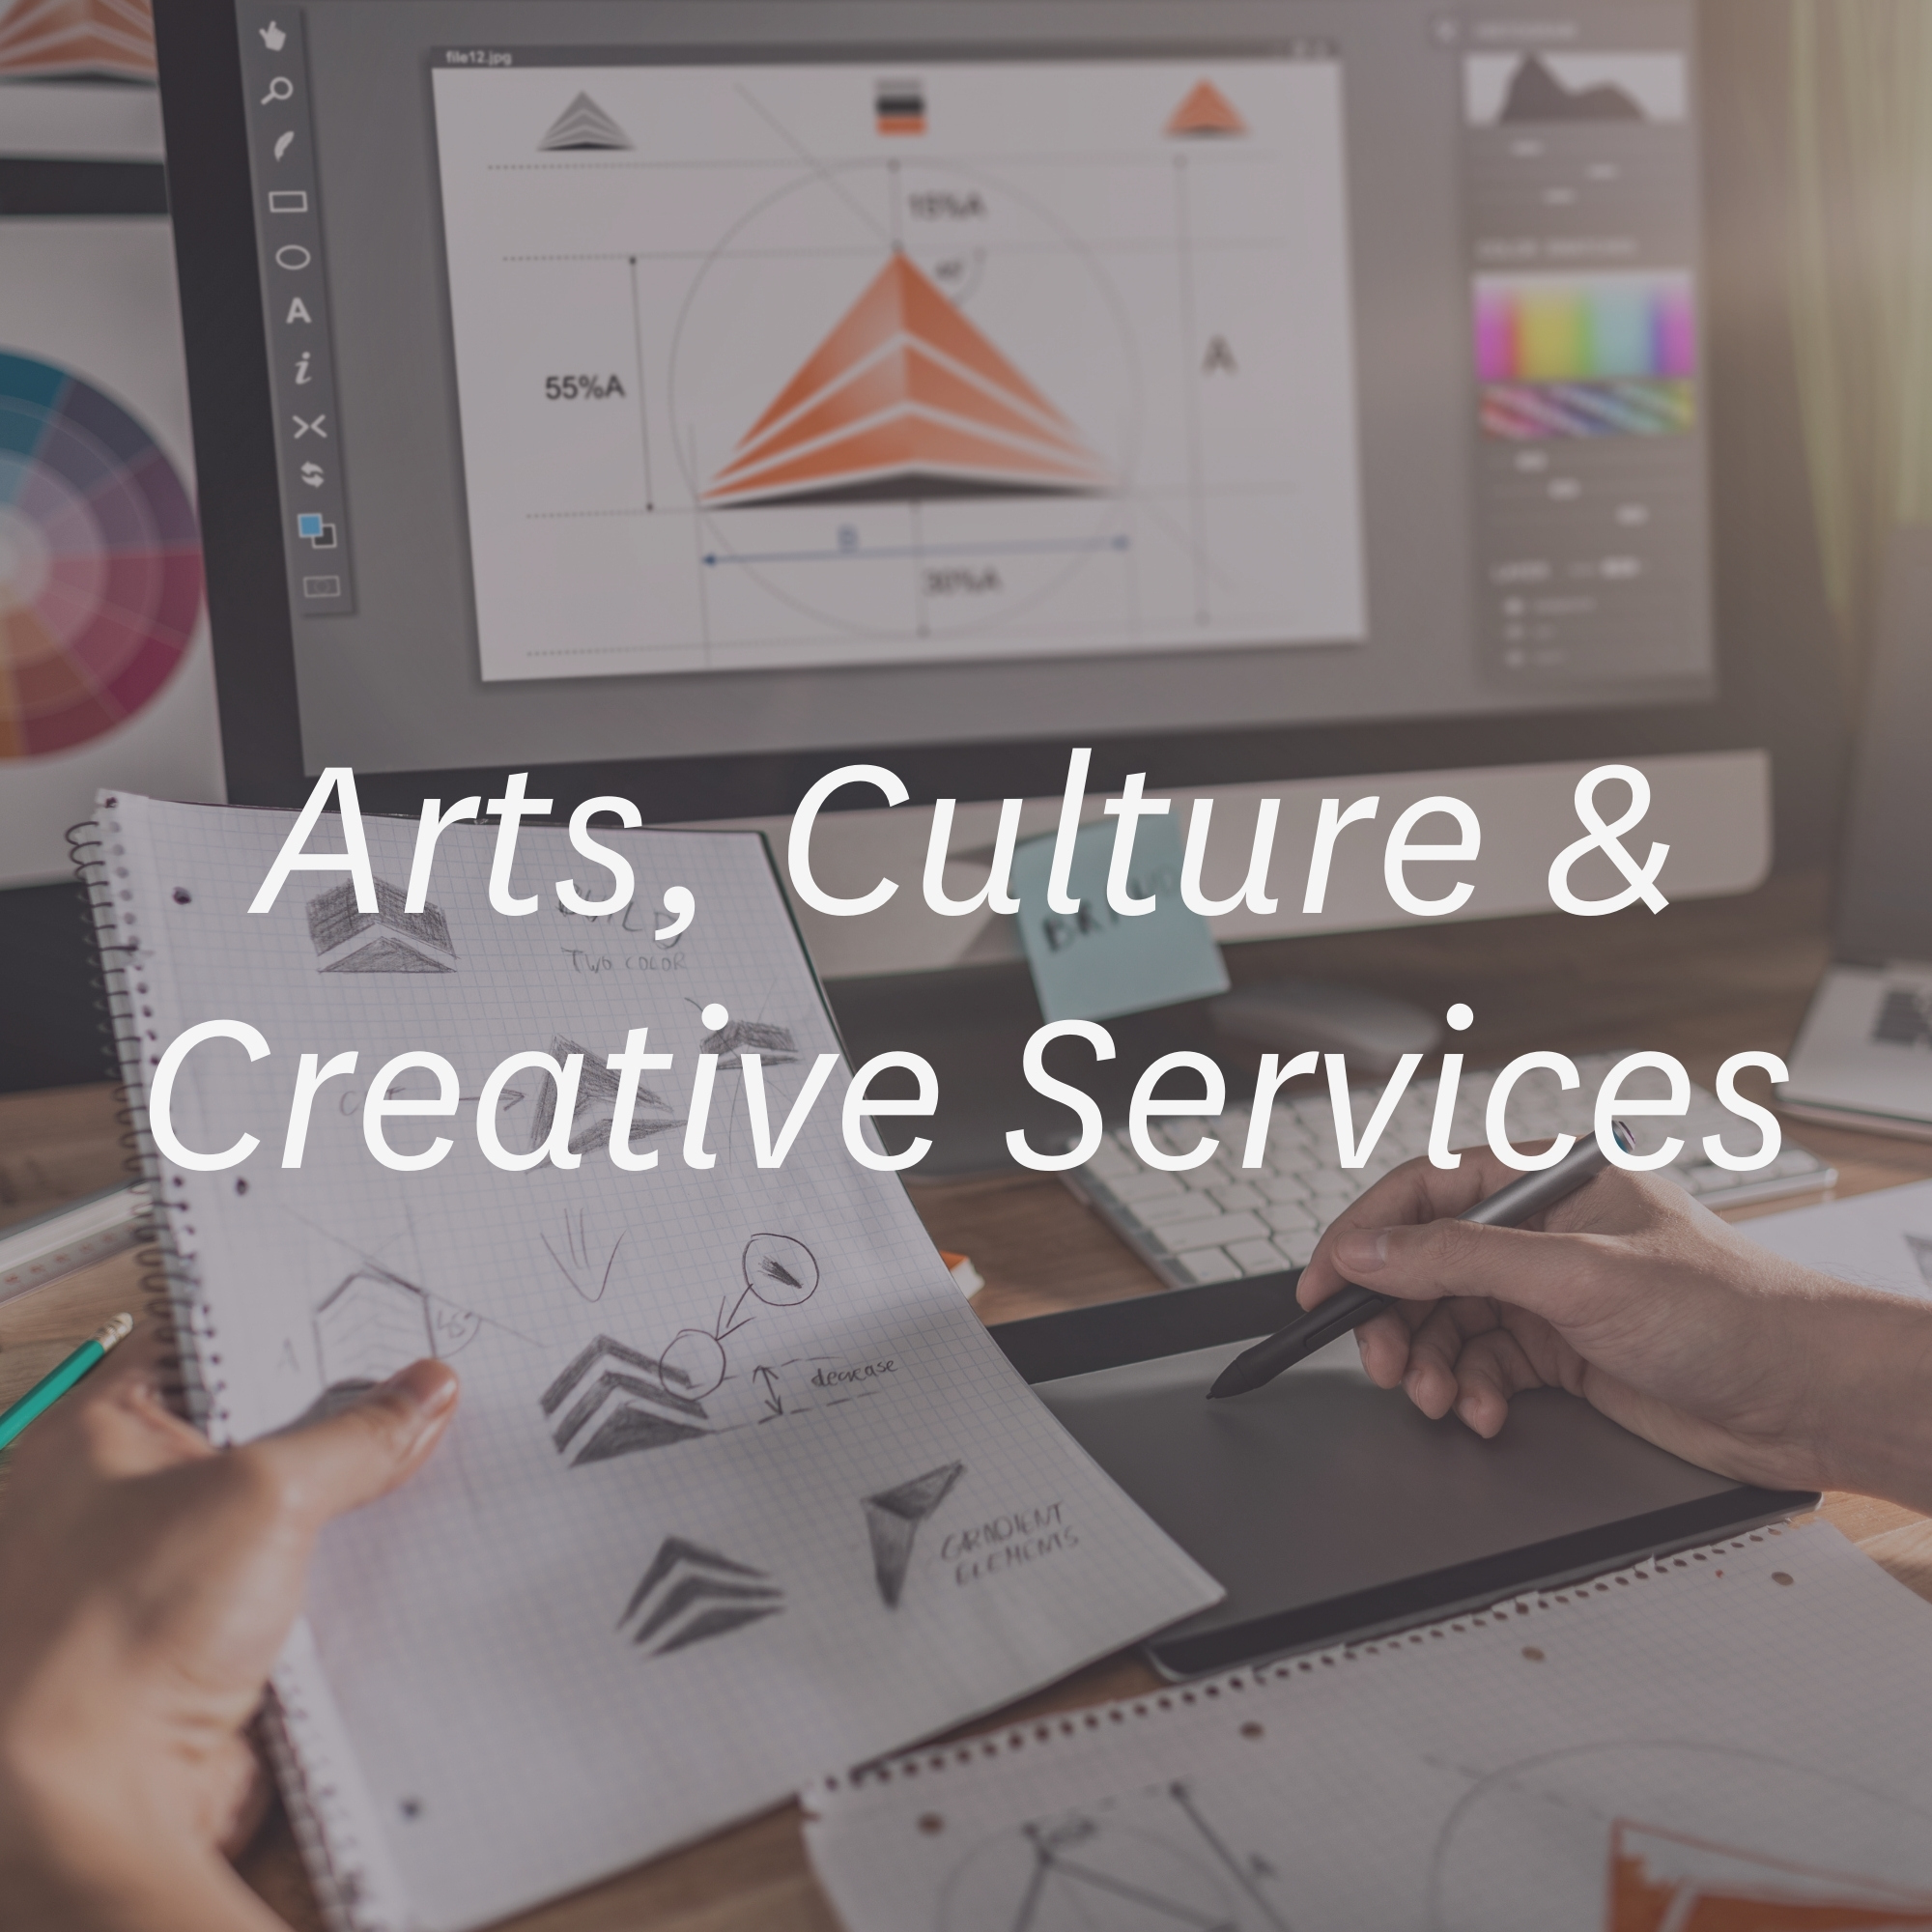 Arts, Culture & Creative Services